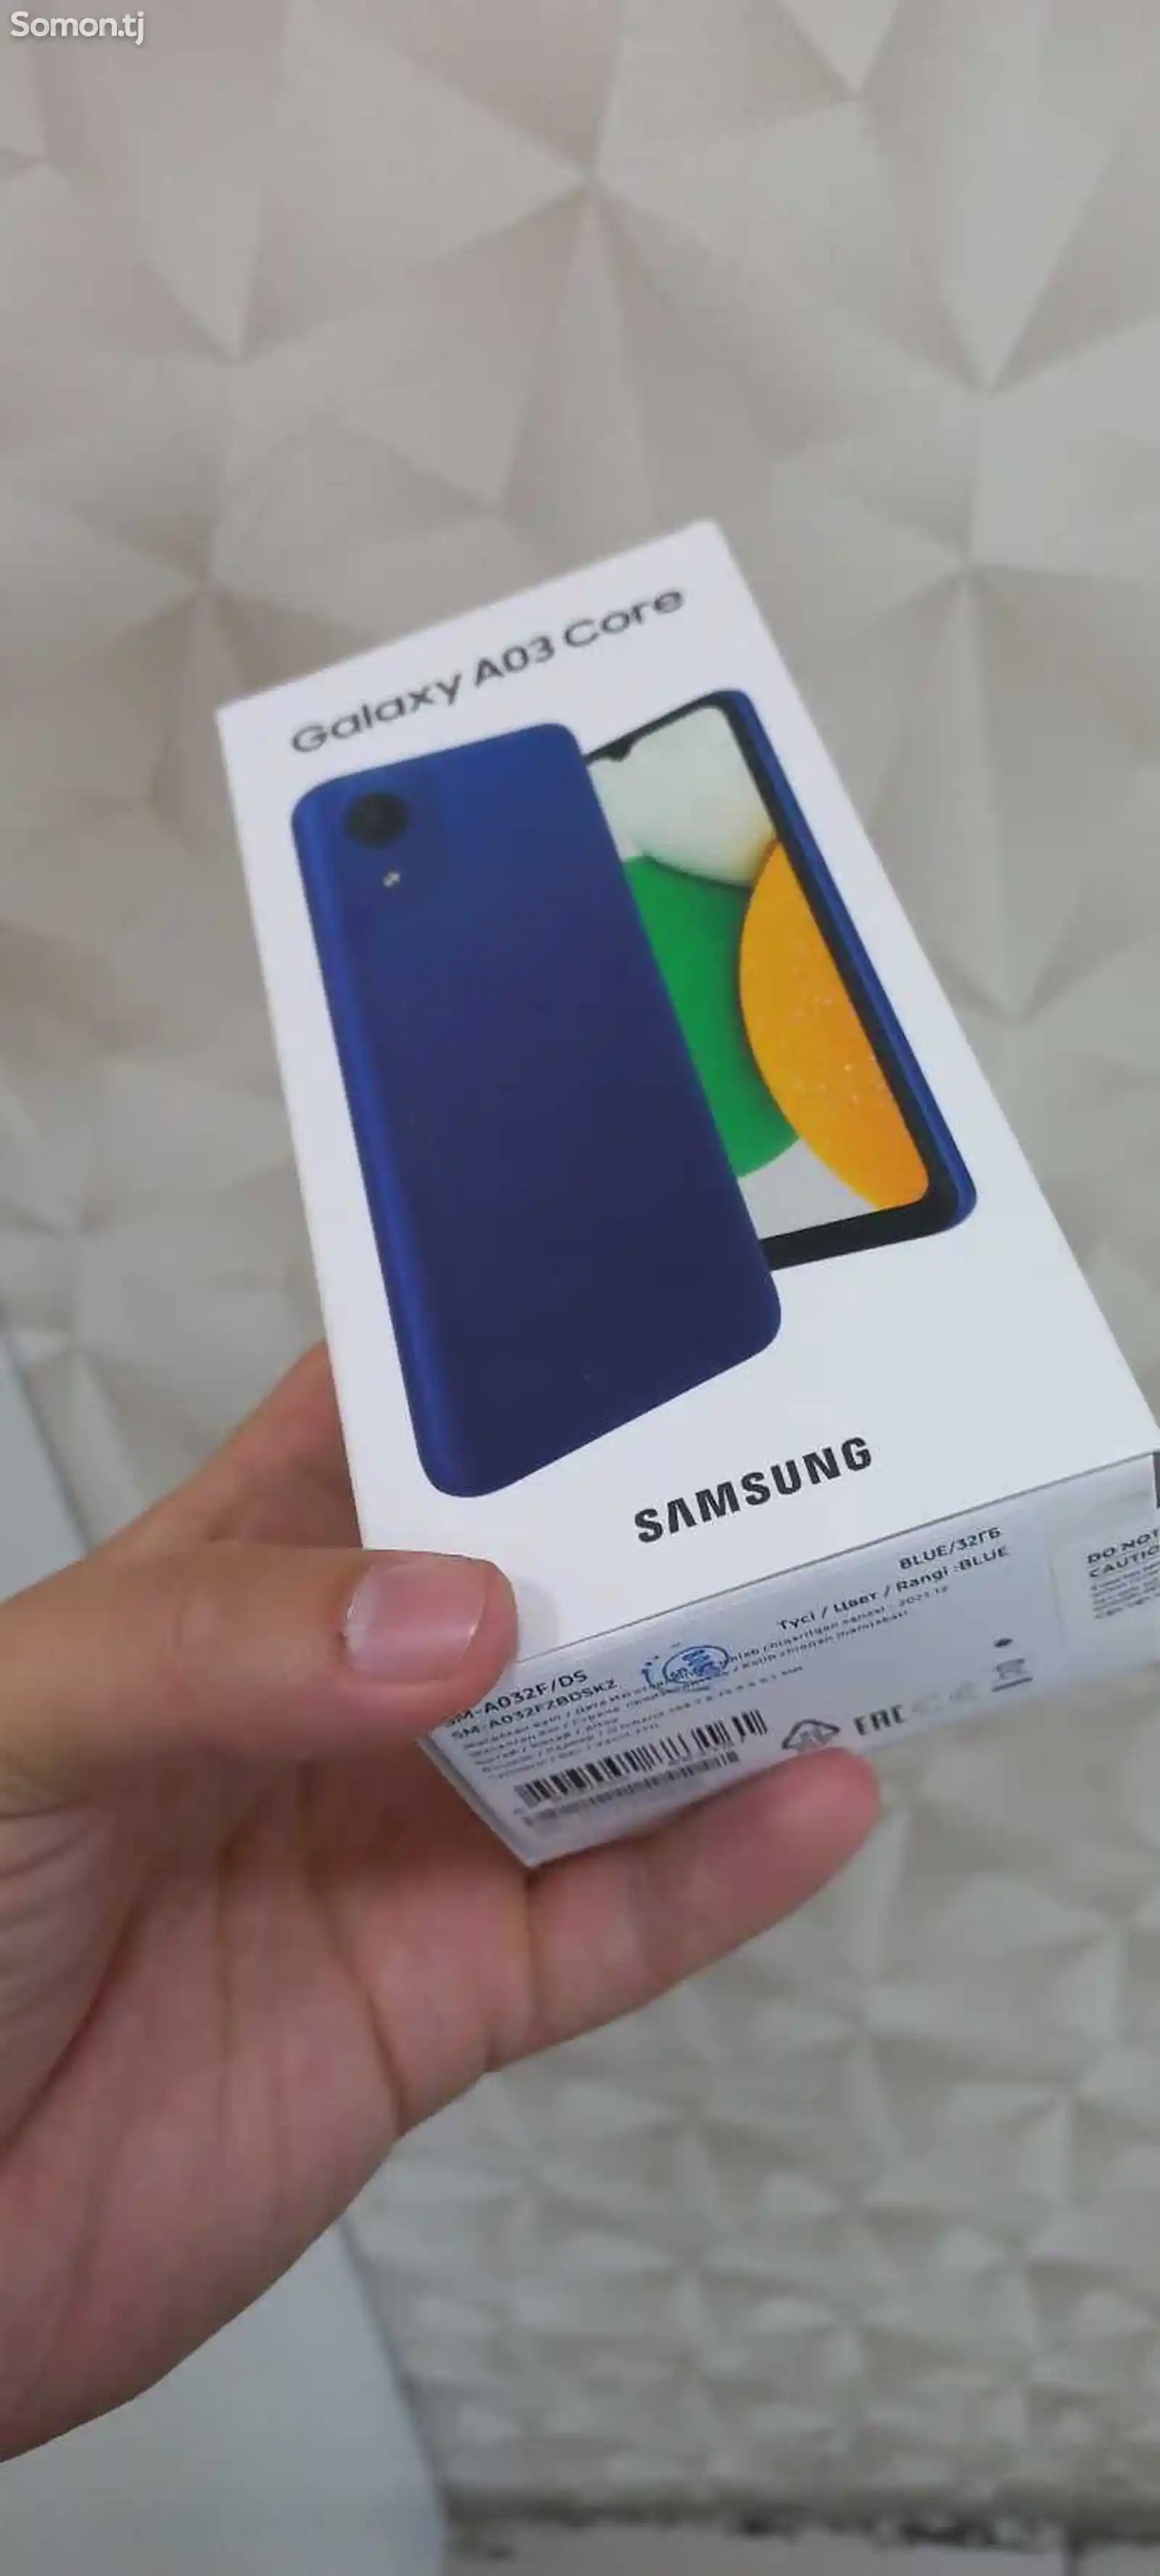 Samsung Galaxy A03 core